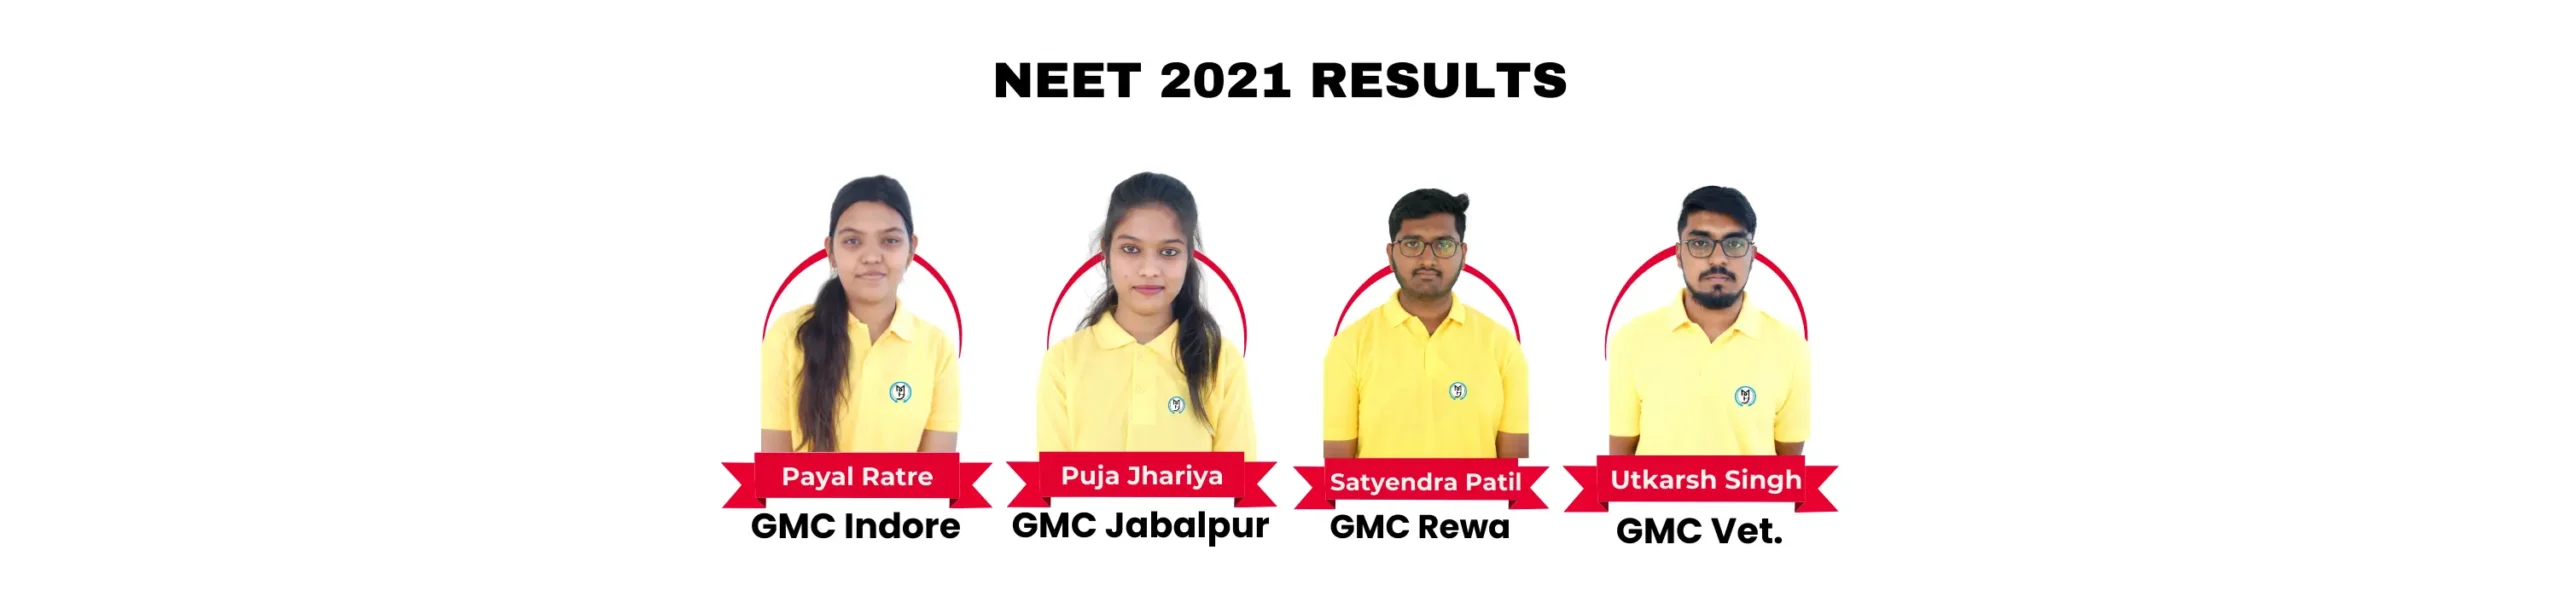 Merithub NEET 2021 result